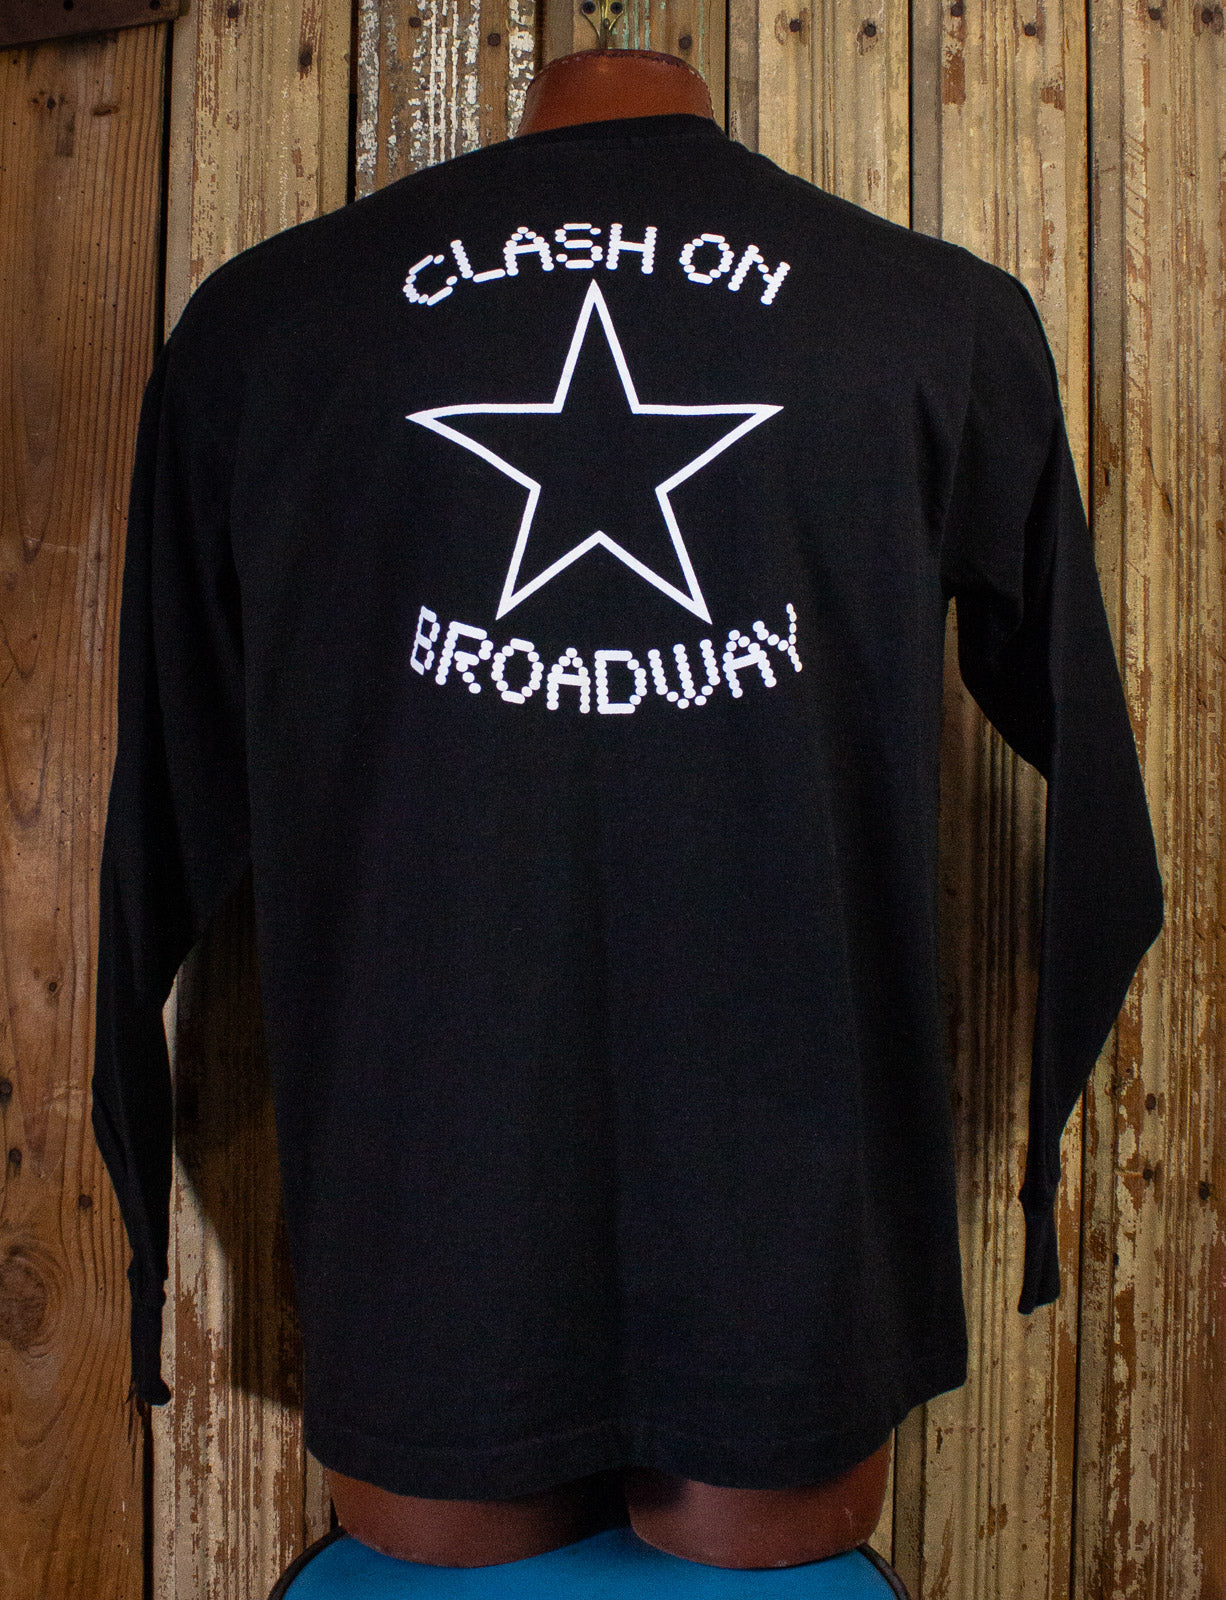 Vintage The Clash On Broadway Concert T Shirt 1991 Black XL